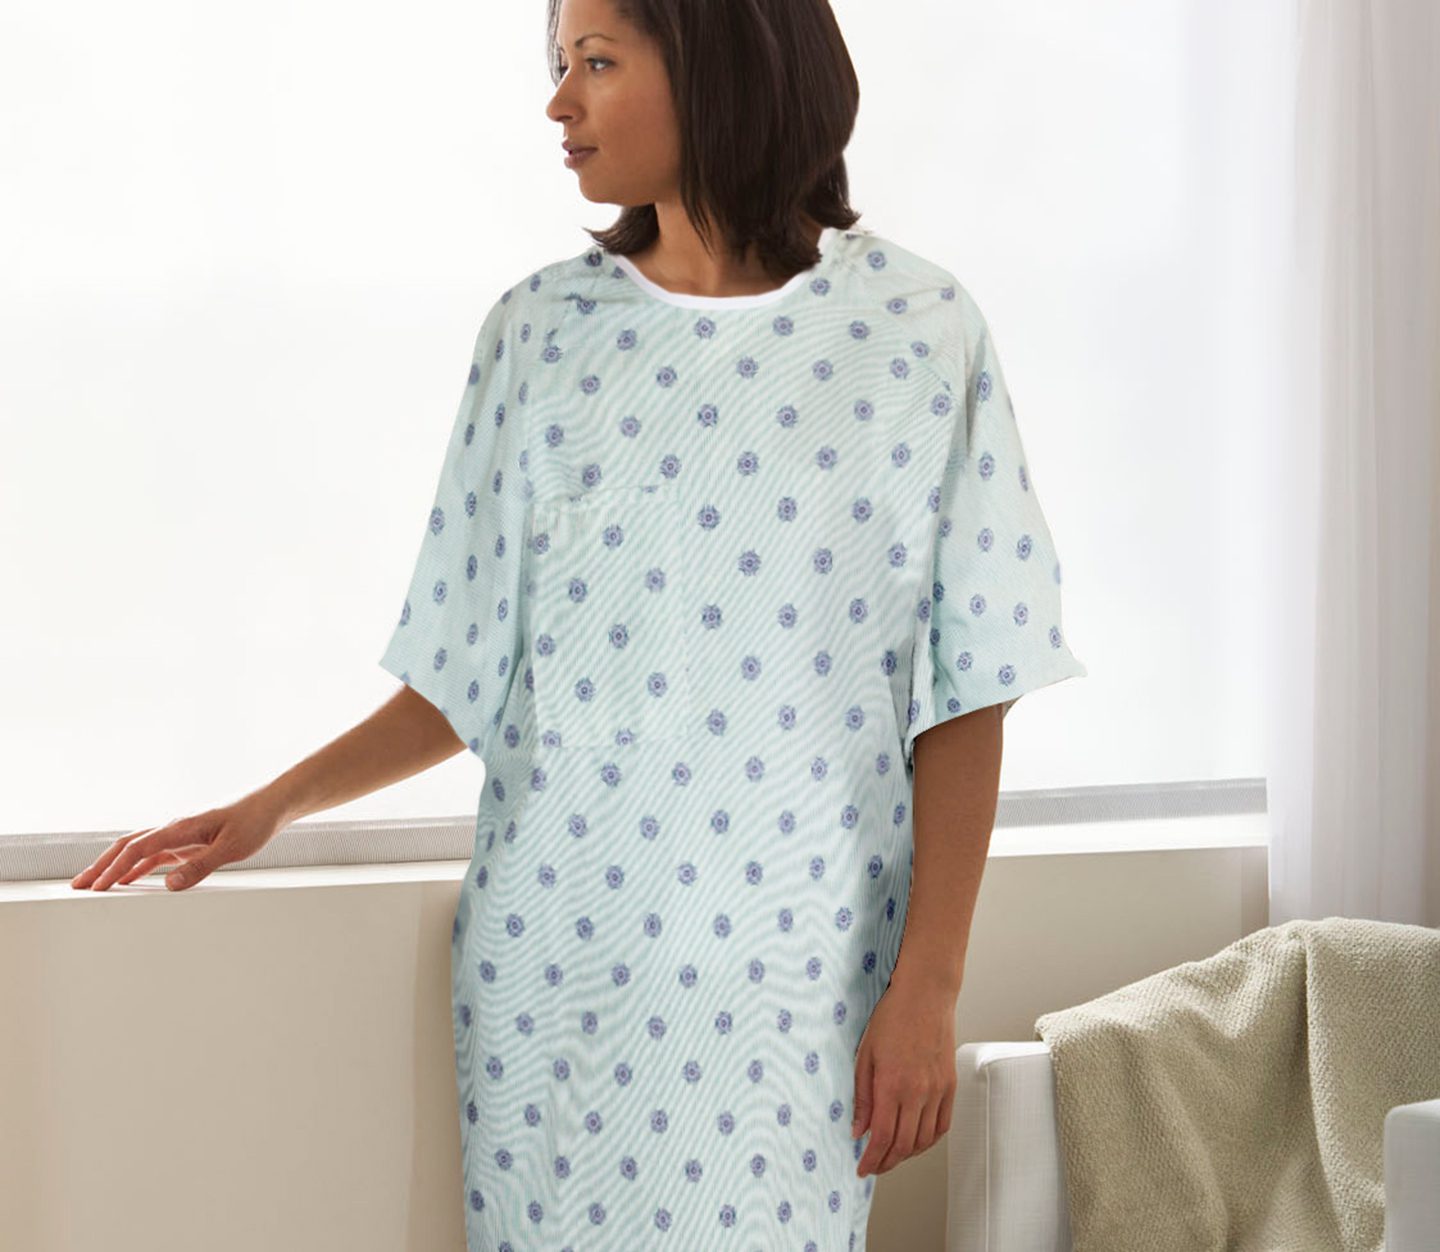 Bariatric Double Lapover Patient Gowns | Healthcare Apparel